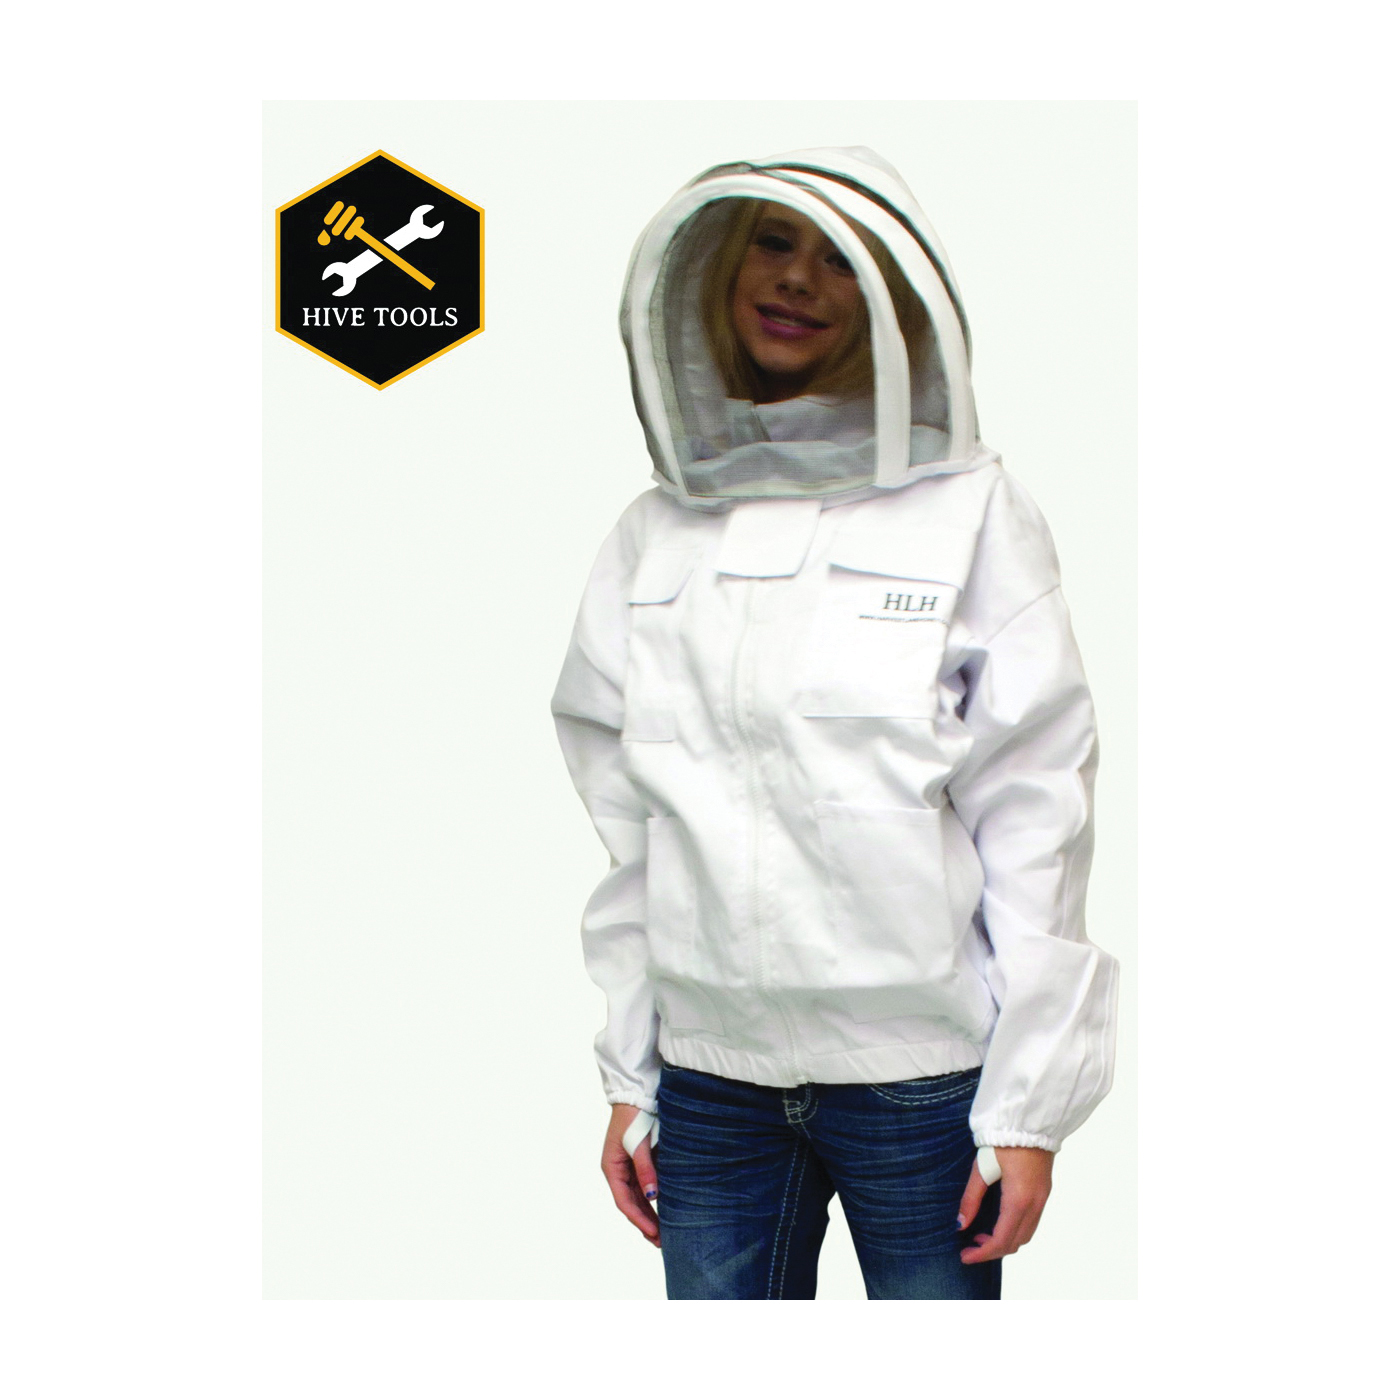 CLOTHSJXXL-102 Beekeeper Jacket with Hood, 2XL, Zipper Closure, Polycotton, White